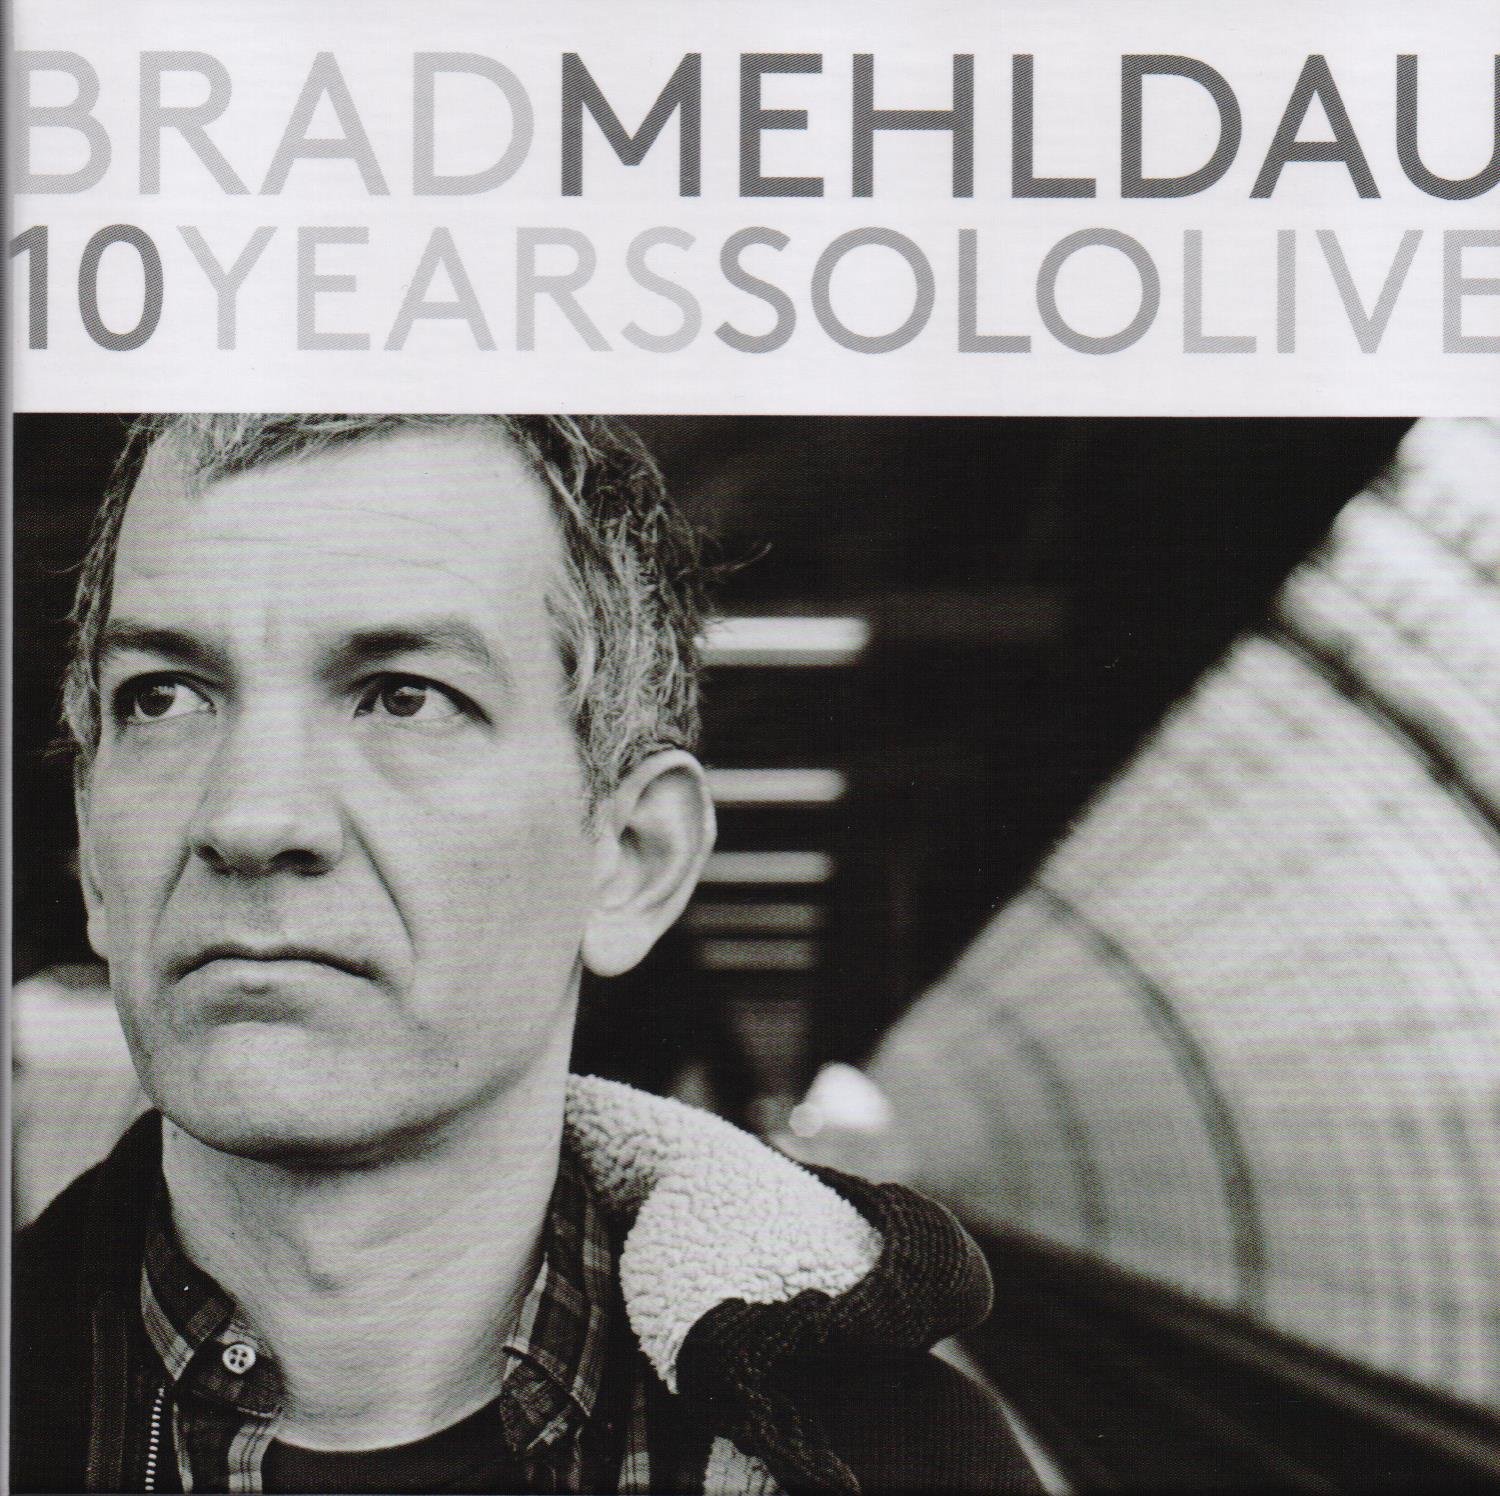 10 Years Solo Live | Brad Mehldau image